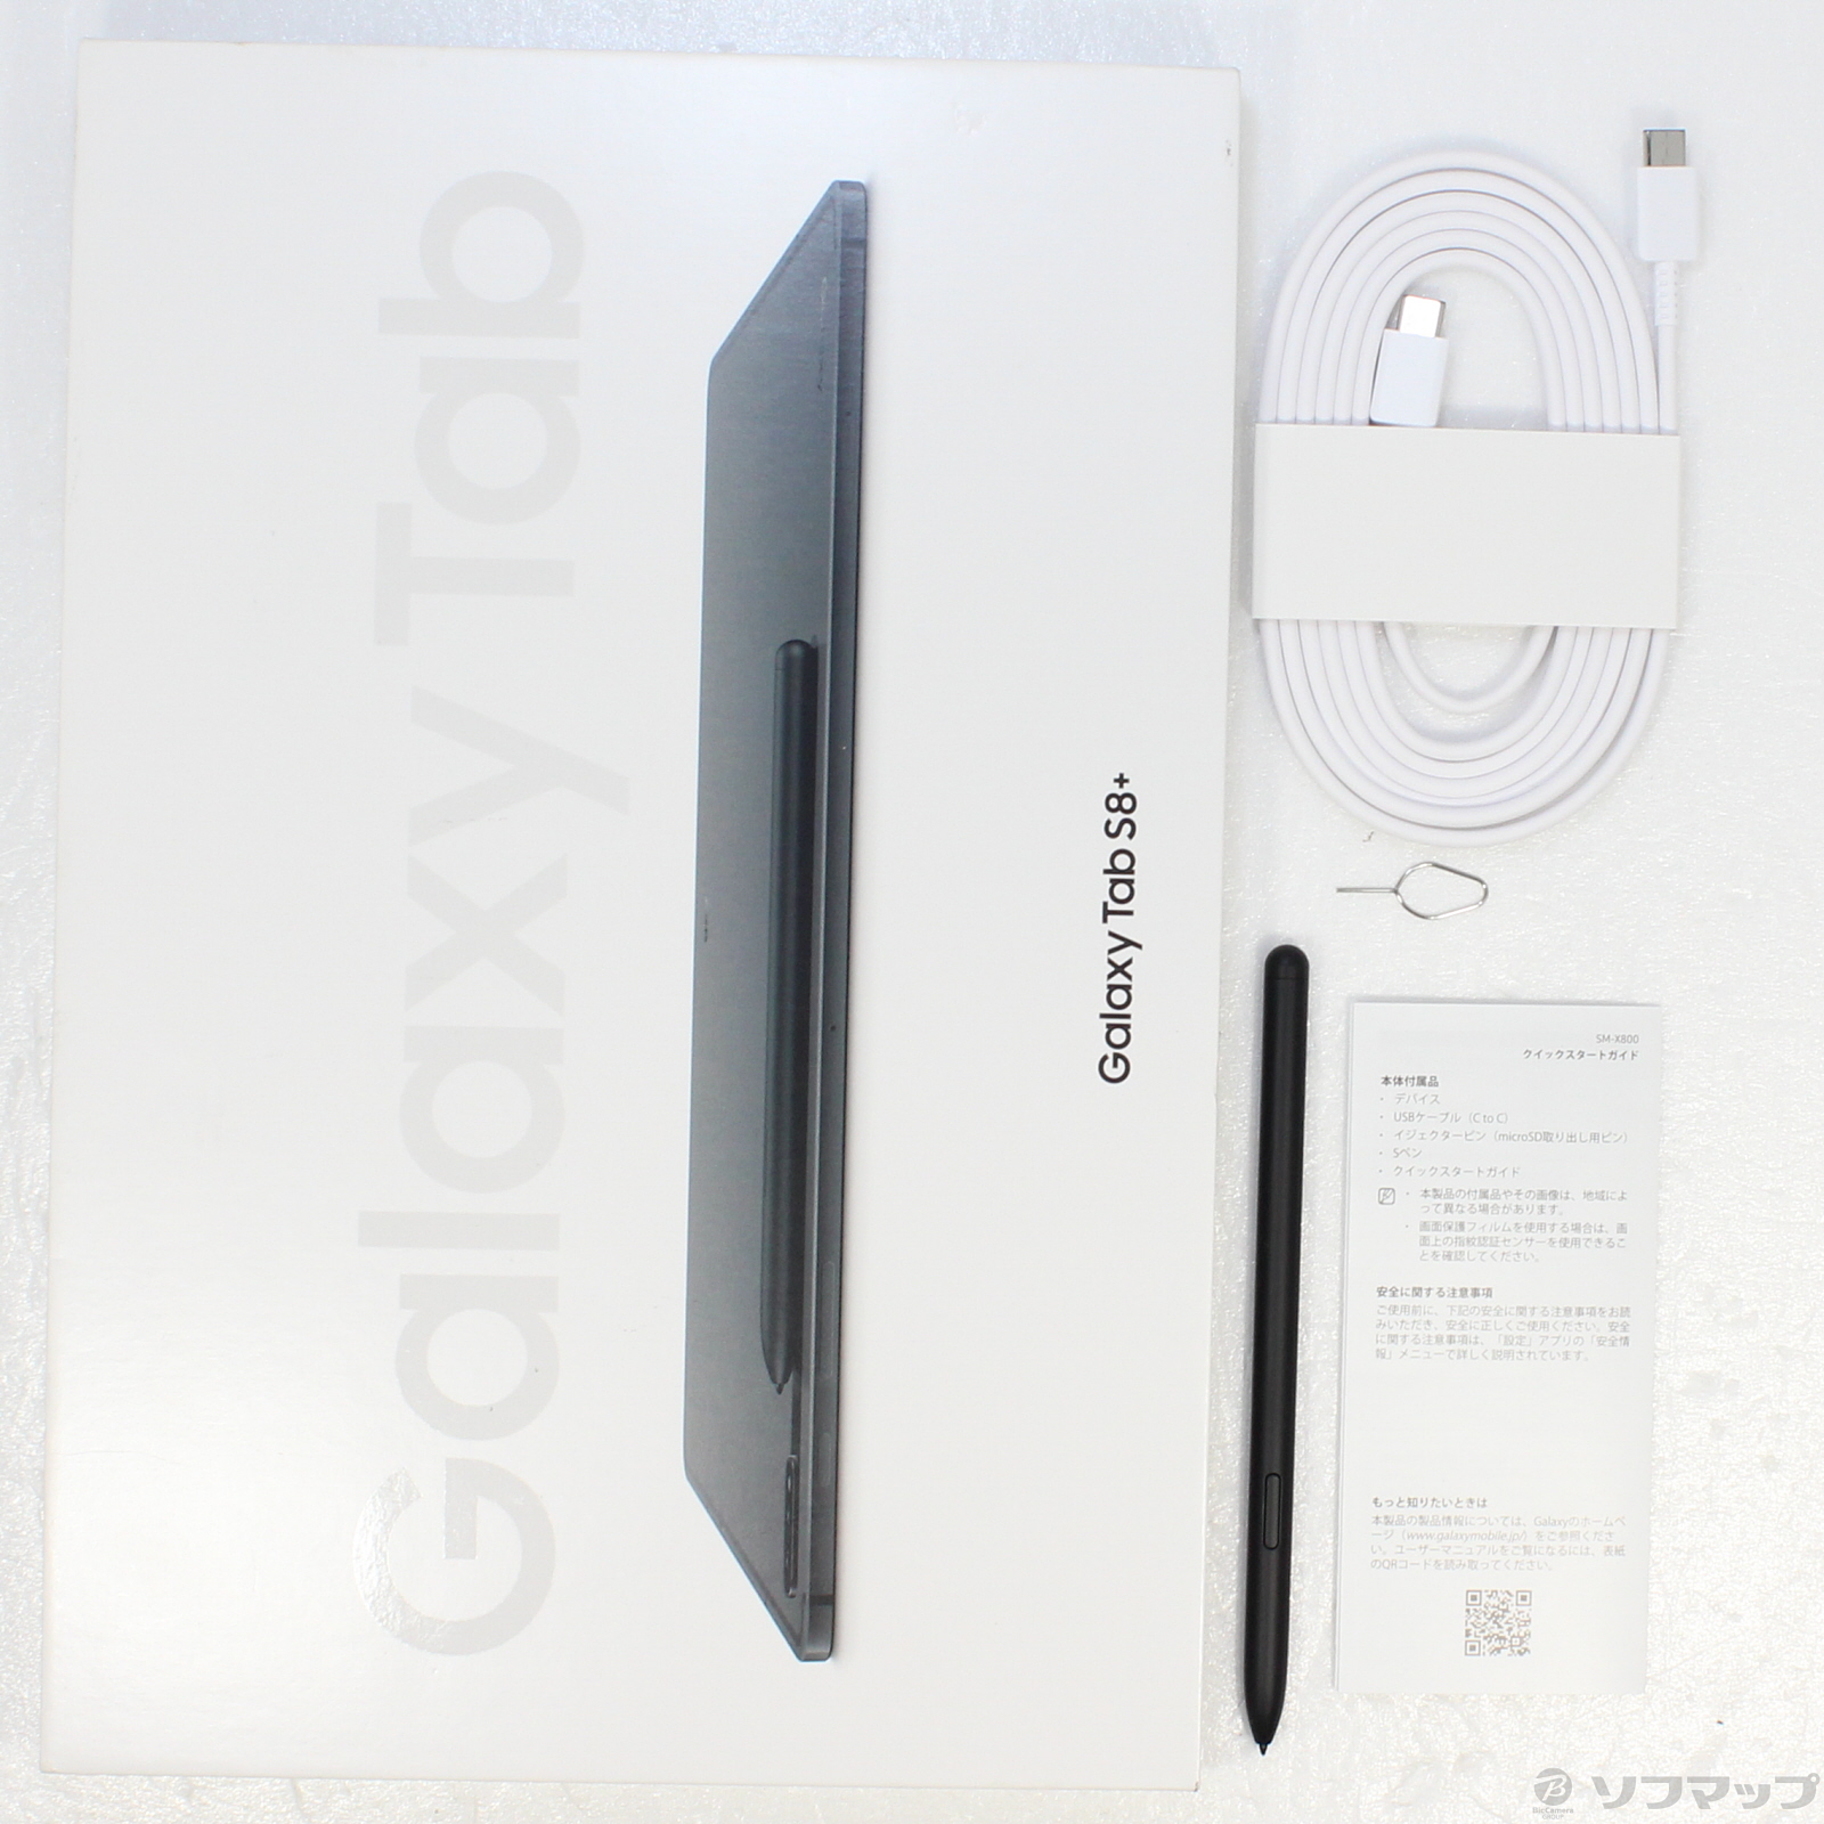 Galaxy Tab S8+ グラファイト SM-X800NZACXJP